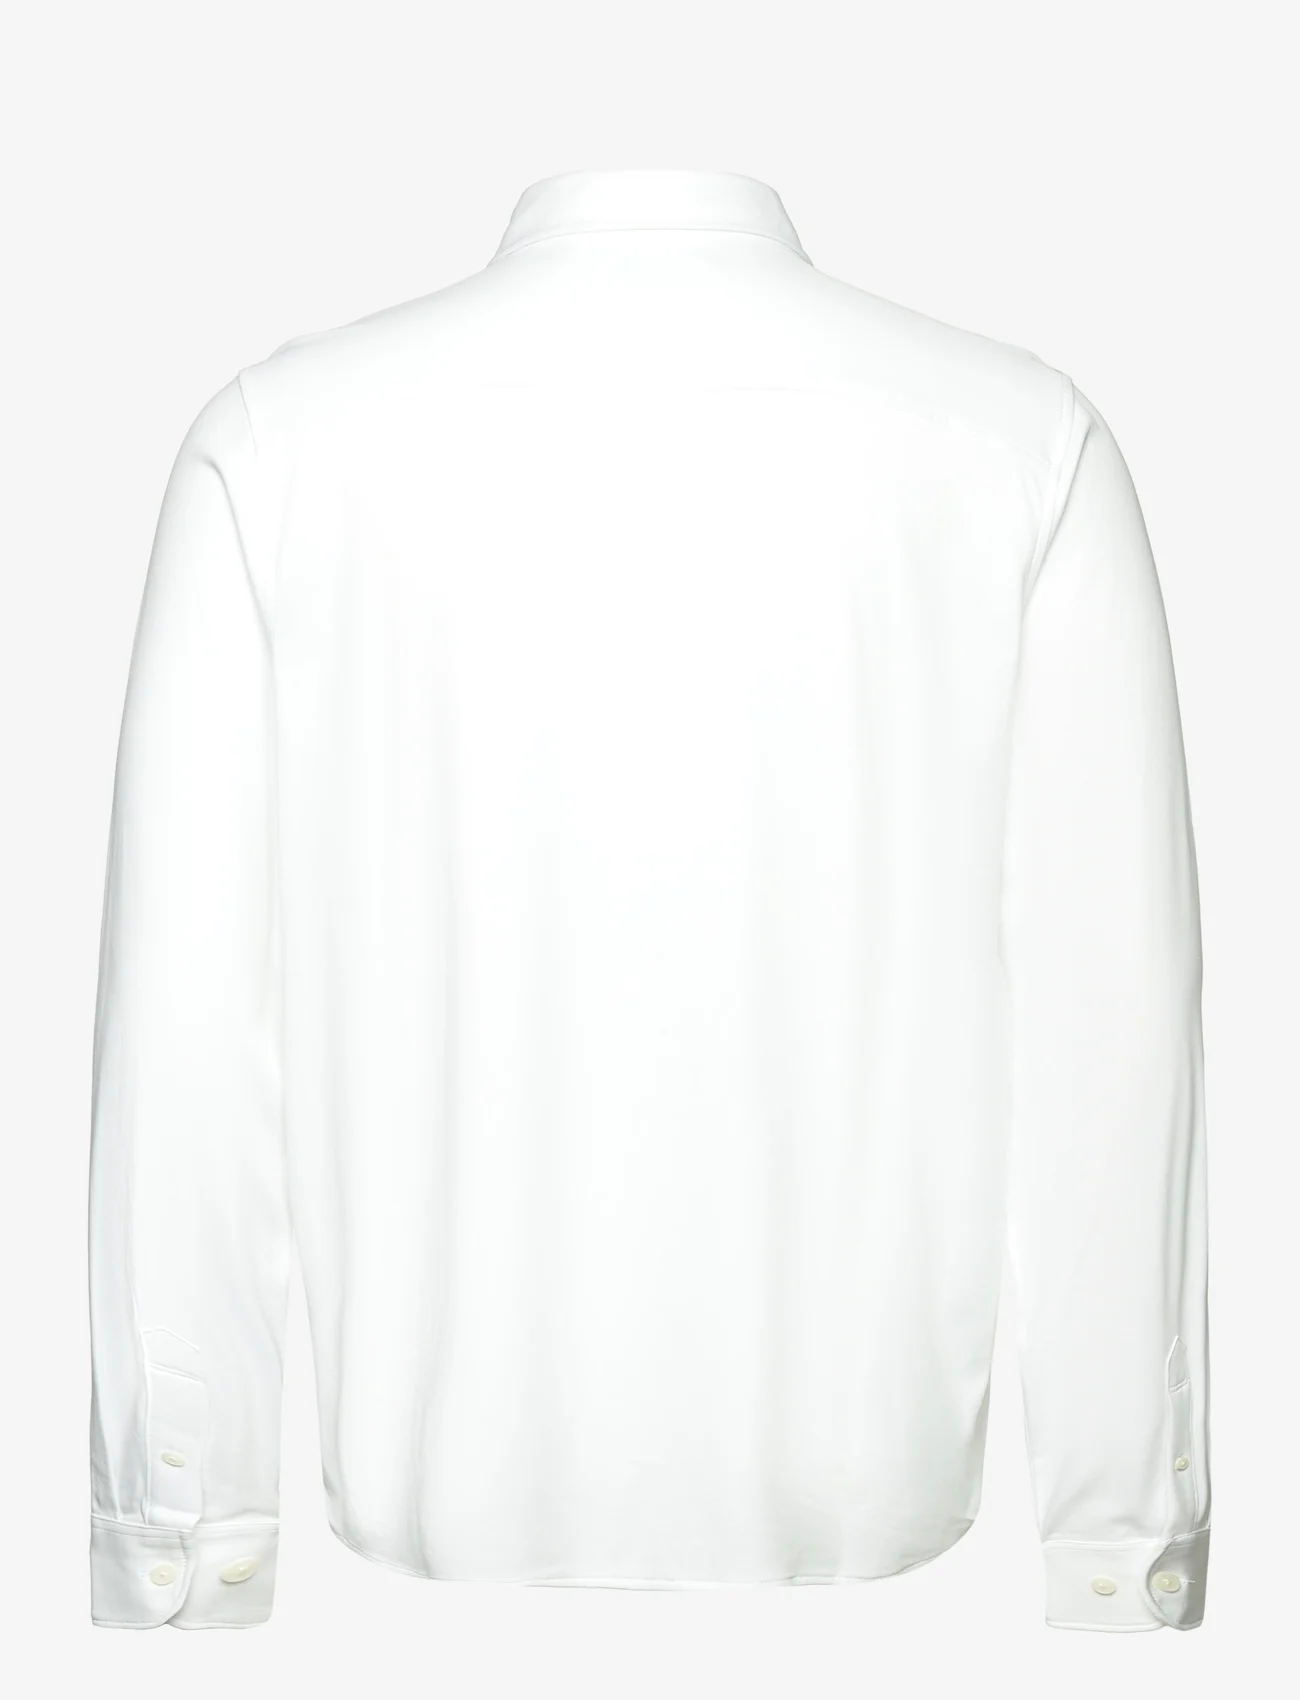 Original Penguin - LS BUTTON FRONT SHIR - basic shirts - bright white - 1